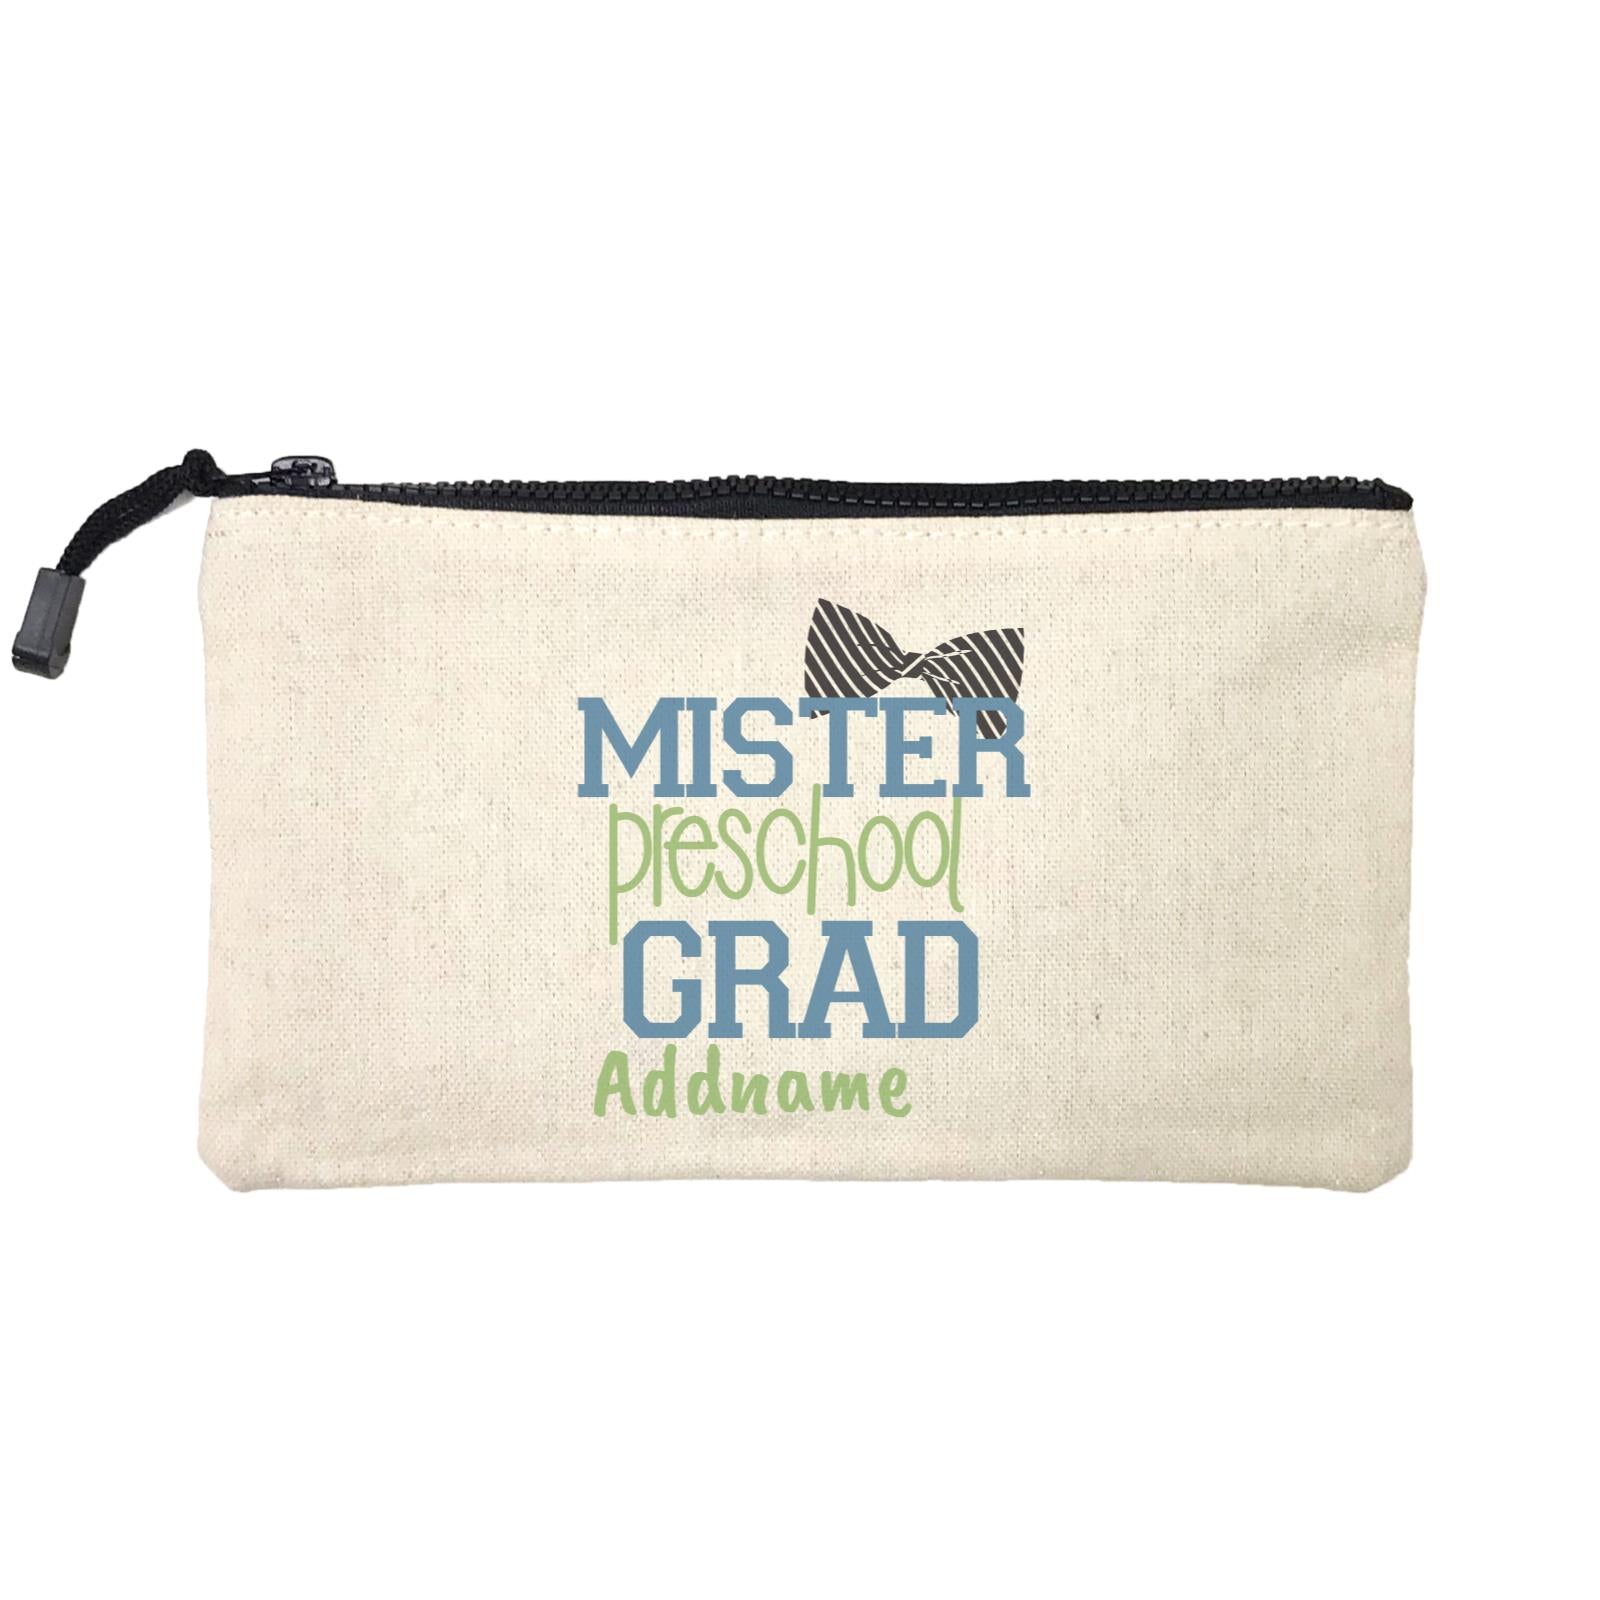 Graduation Series Mister Preschool Grad Mini Accessories Stationery Pouch